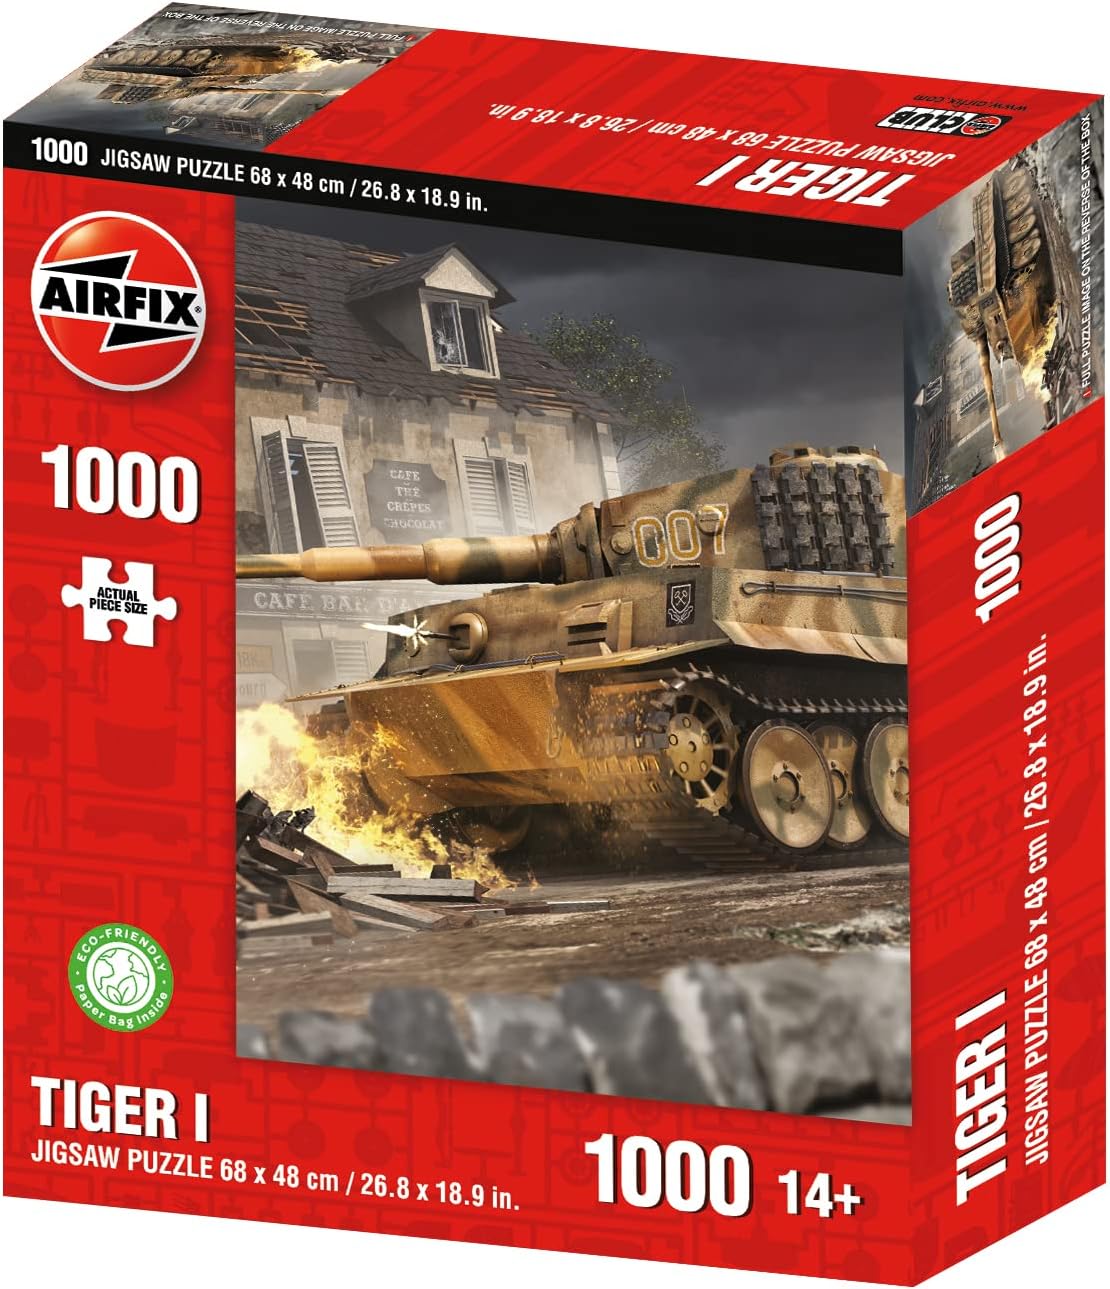 Kidicraft - Airfix - Tiger I - 1000 Piece Jigsaw Puzzle